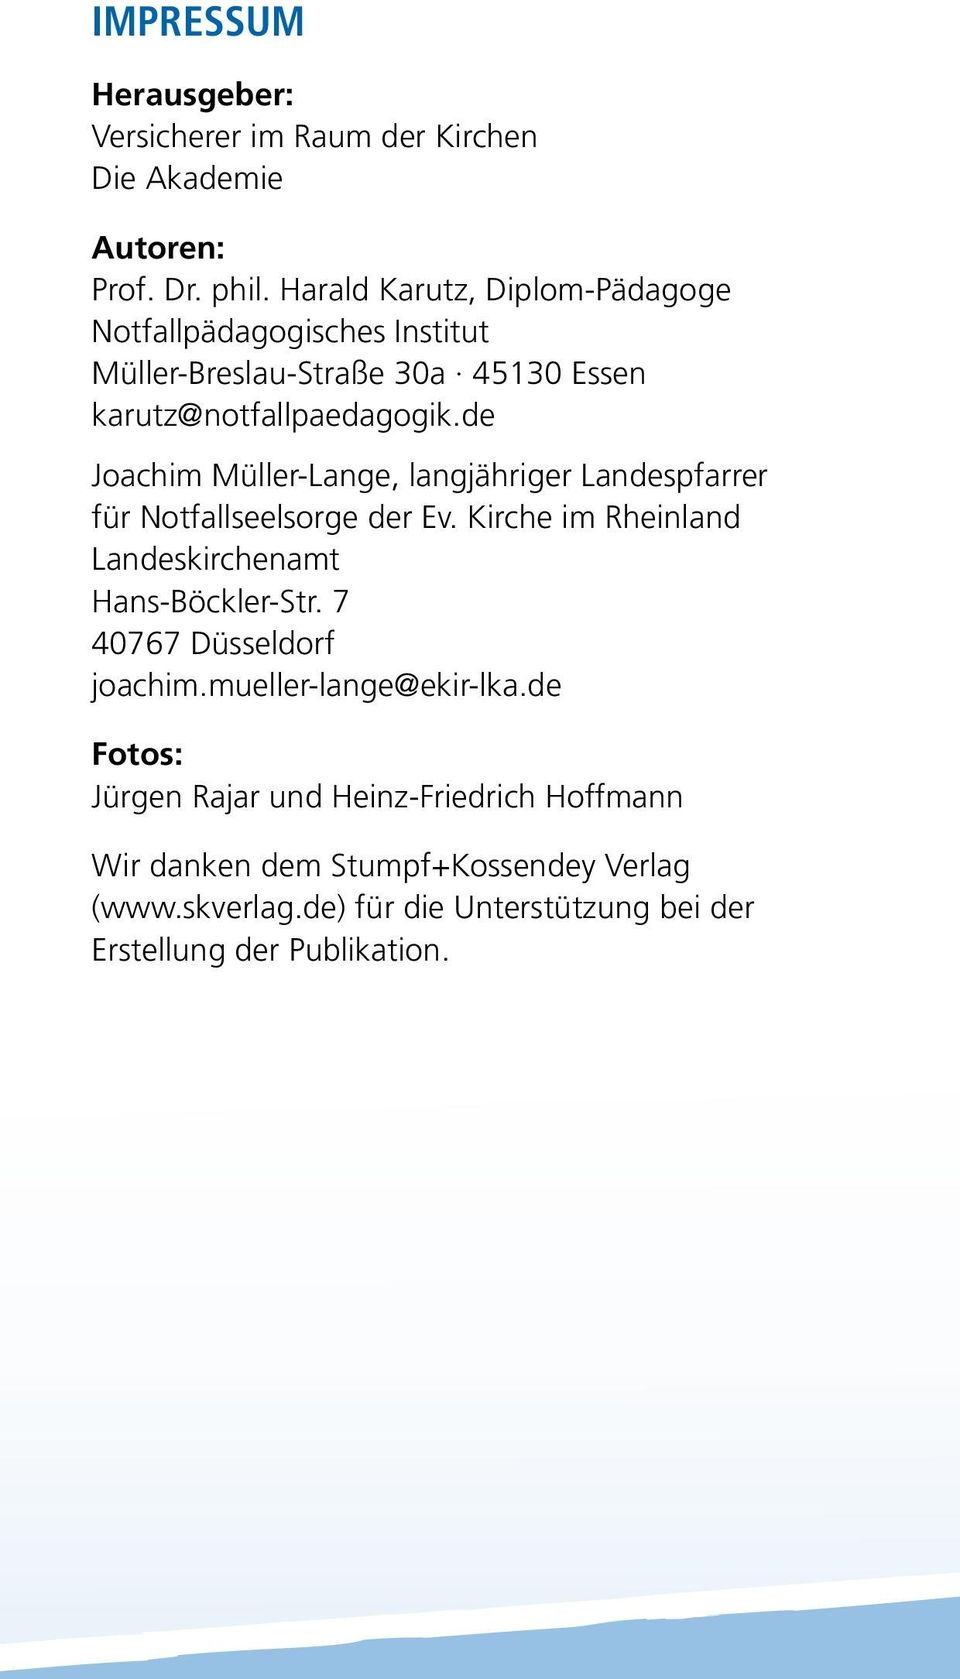 de Joachim Müller-Lange, langjähriger Landespfarrer für Notfallseelsorge der Ev. Kirche im Rheinland Landeskirchenamt Hans-Böckler-Str.